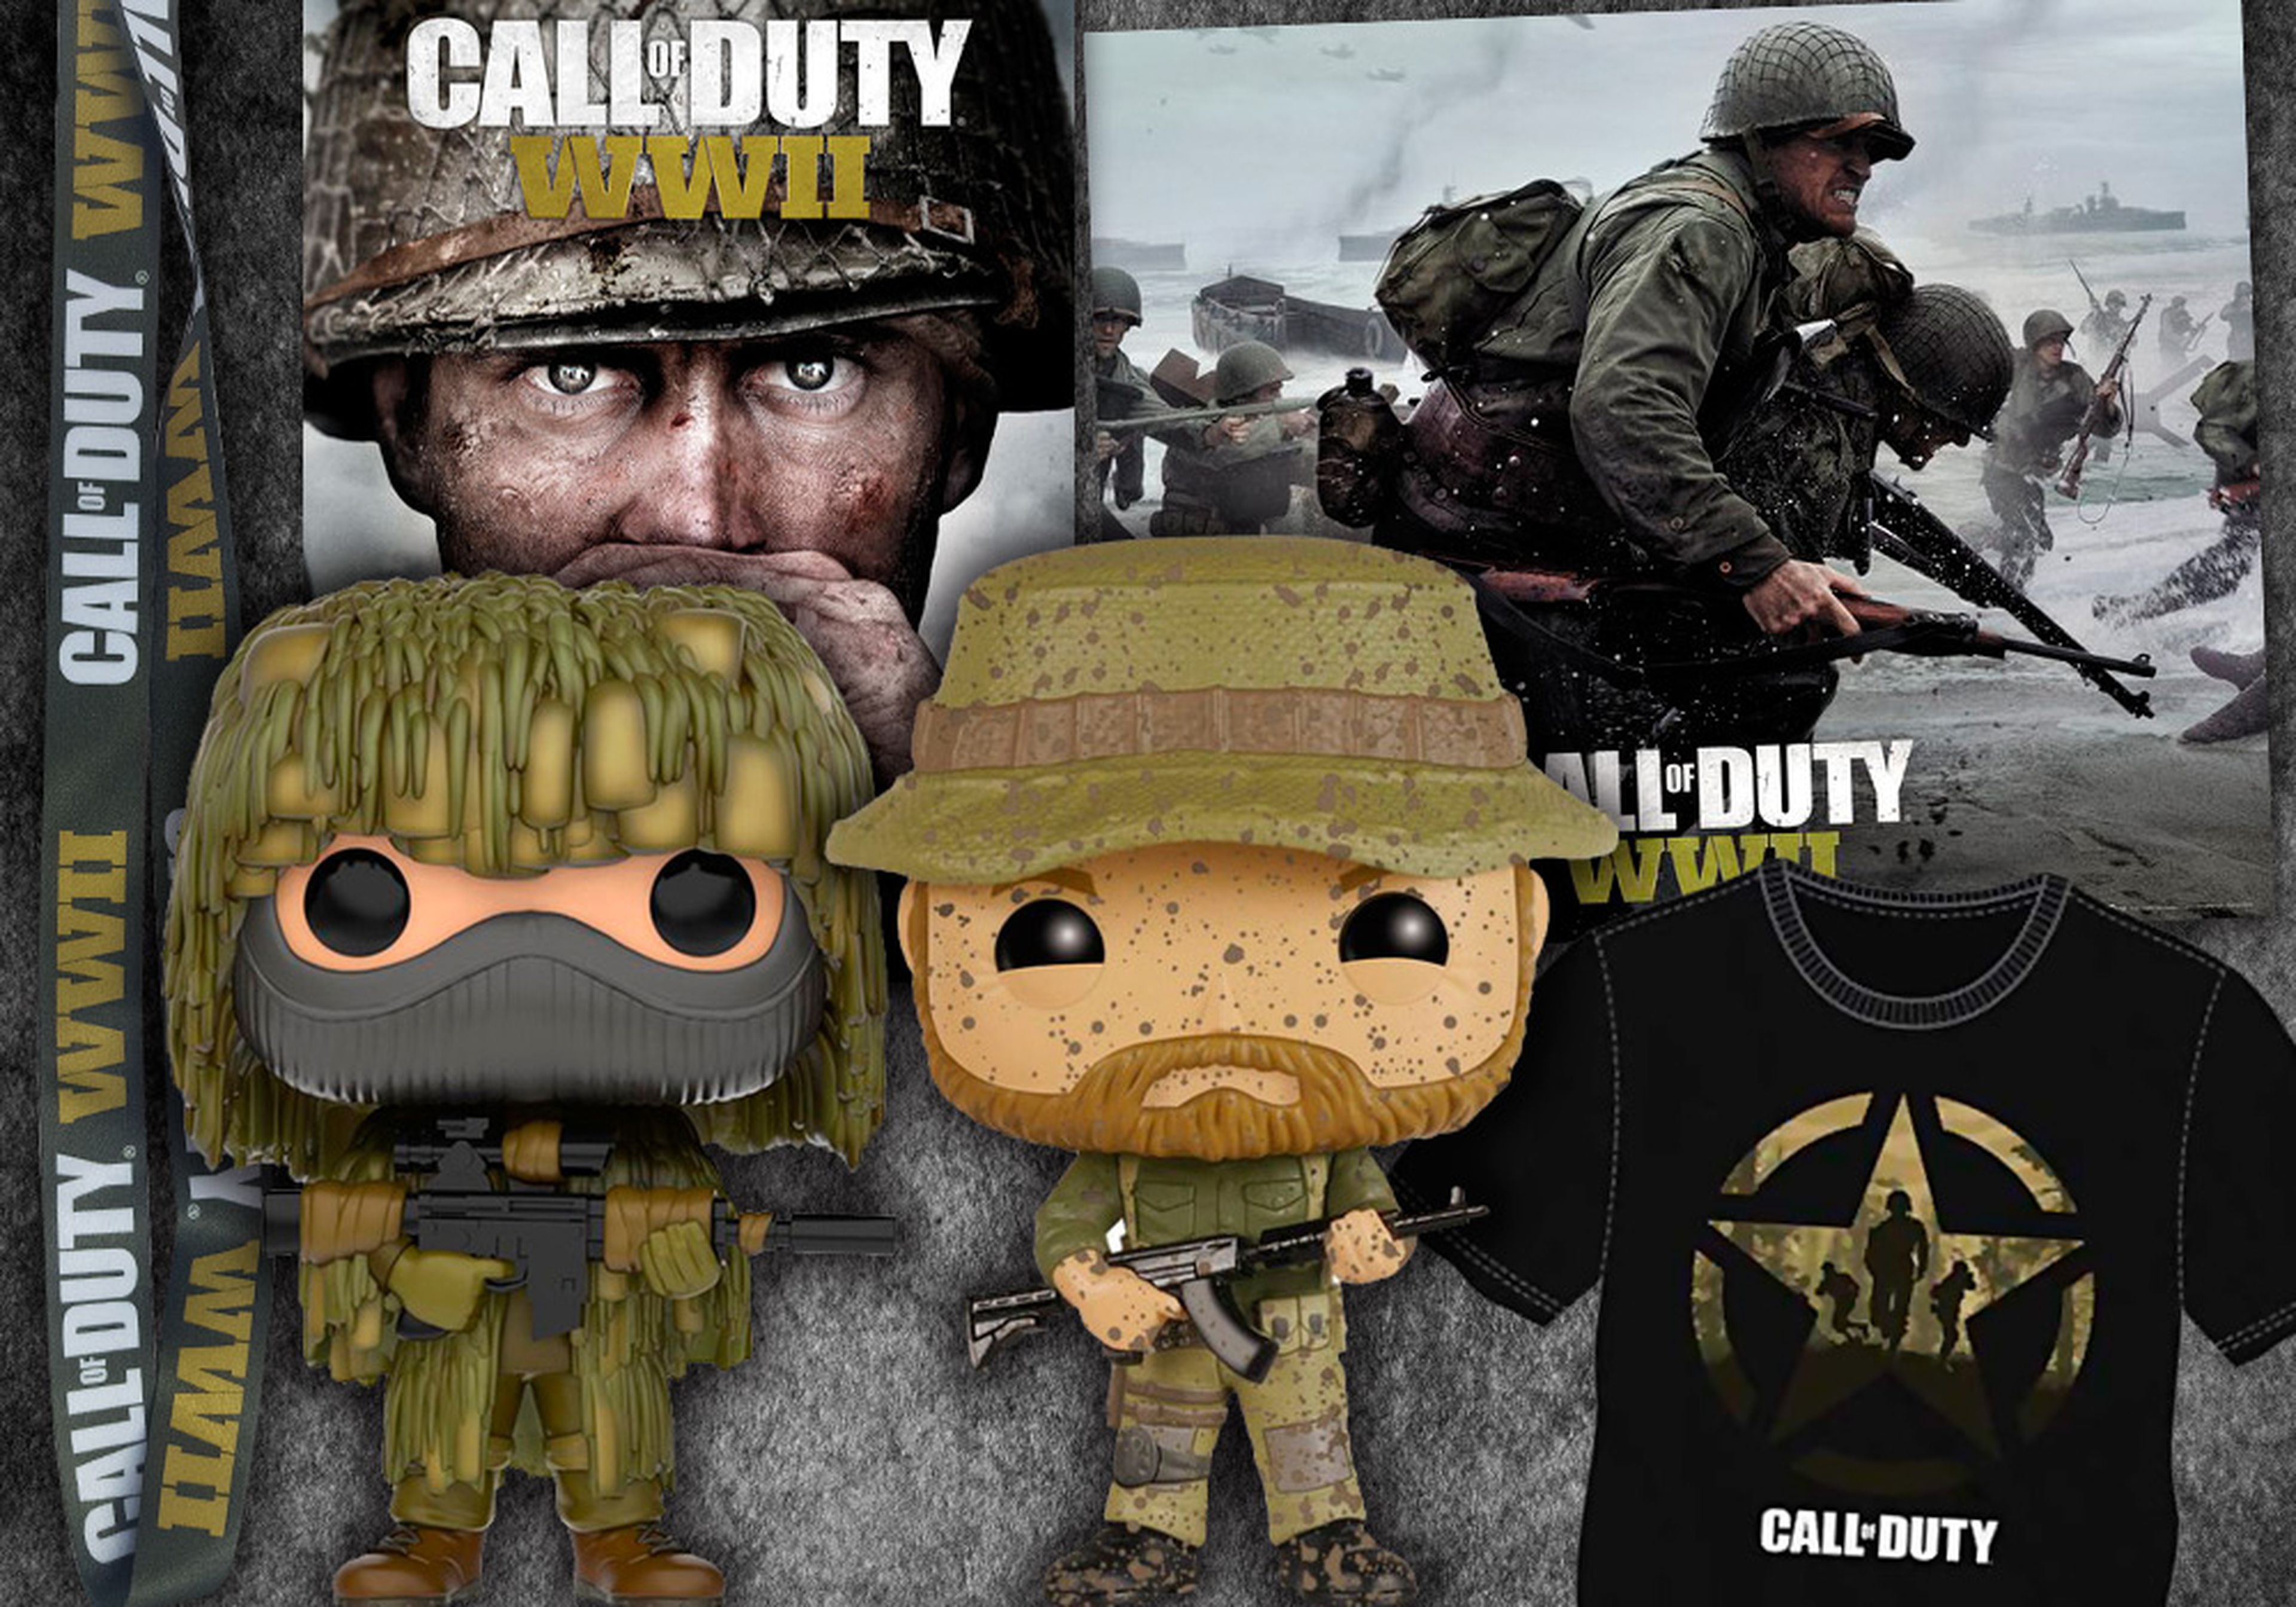 Concurso Call of Duty WWII premios